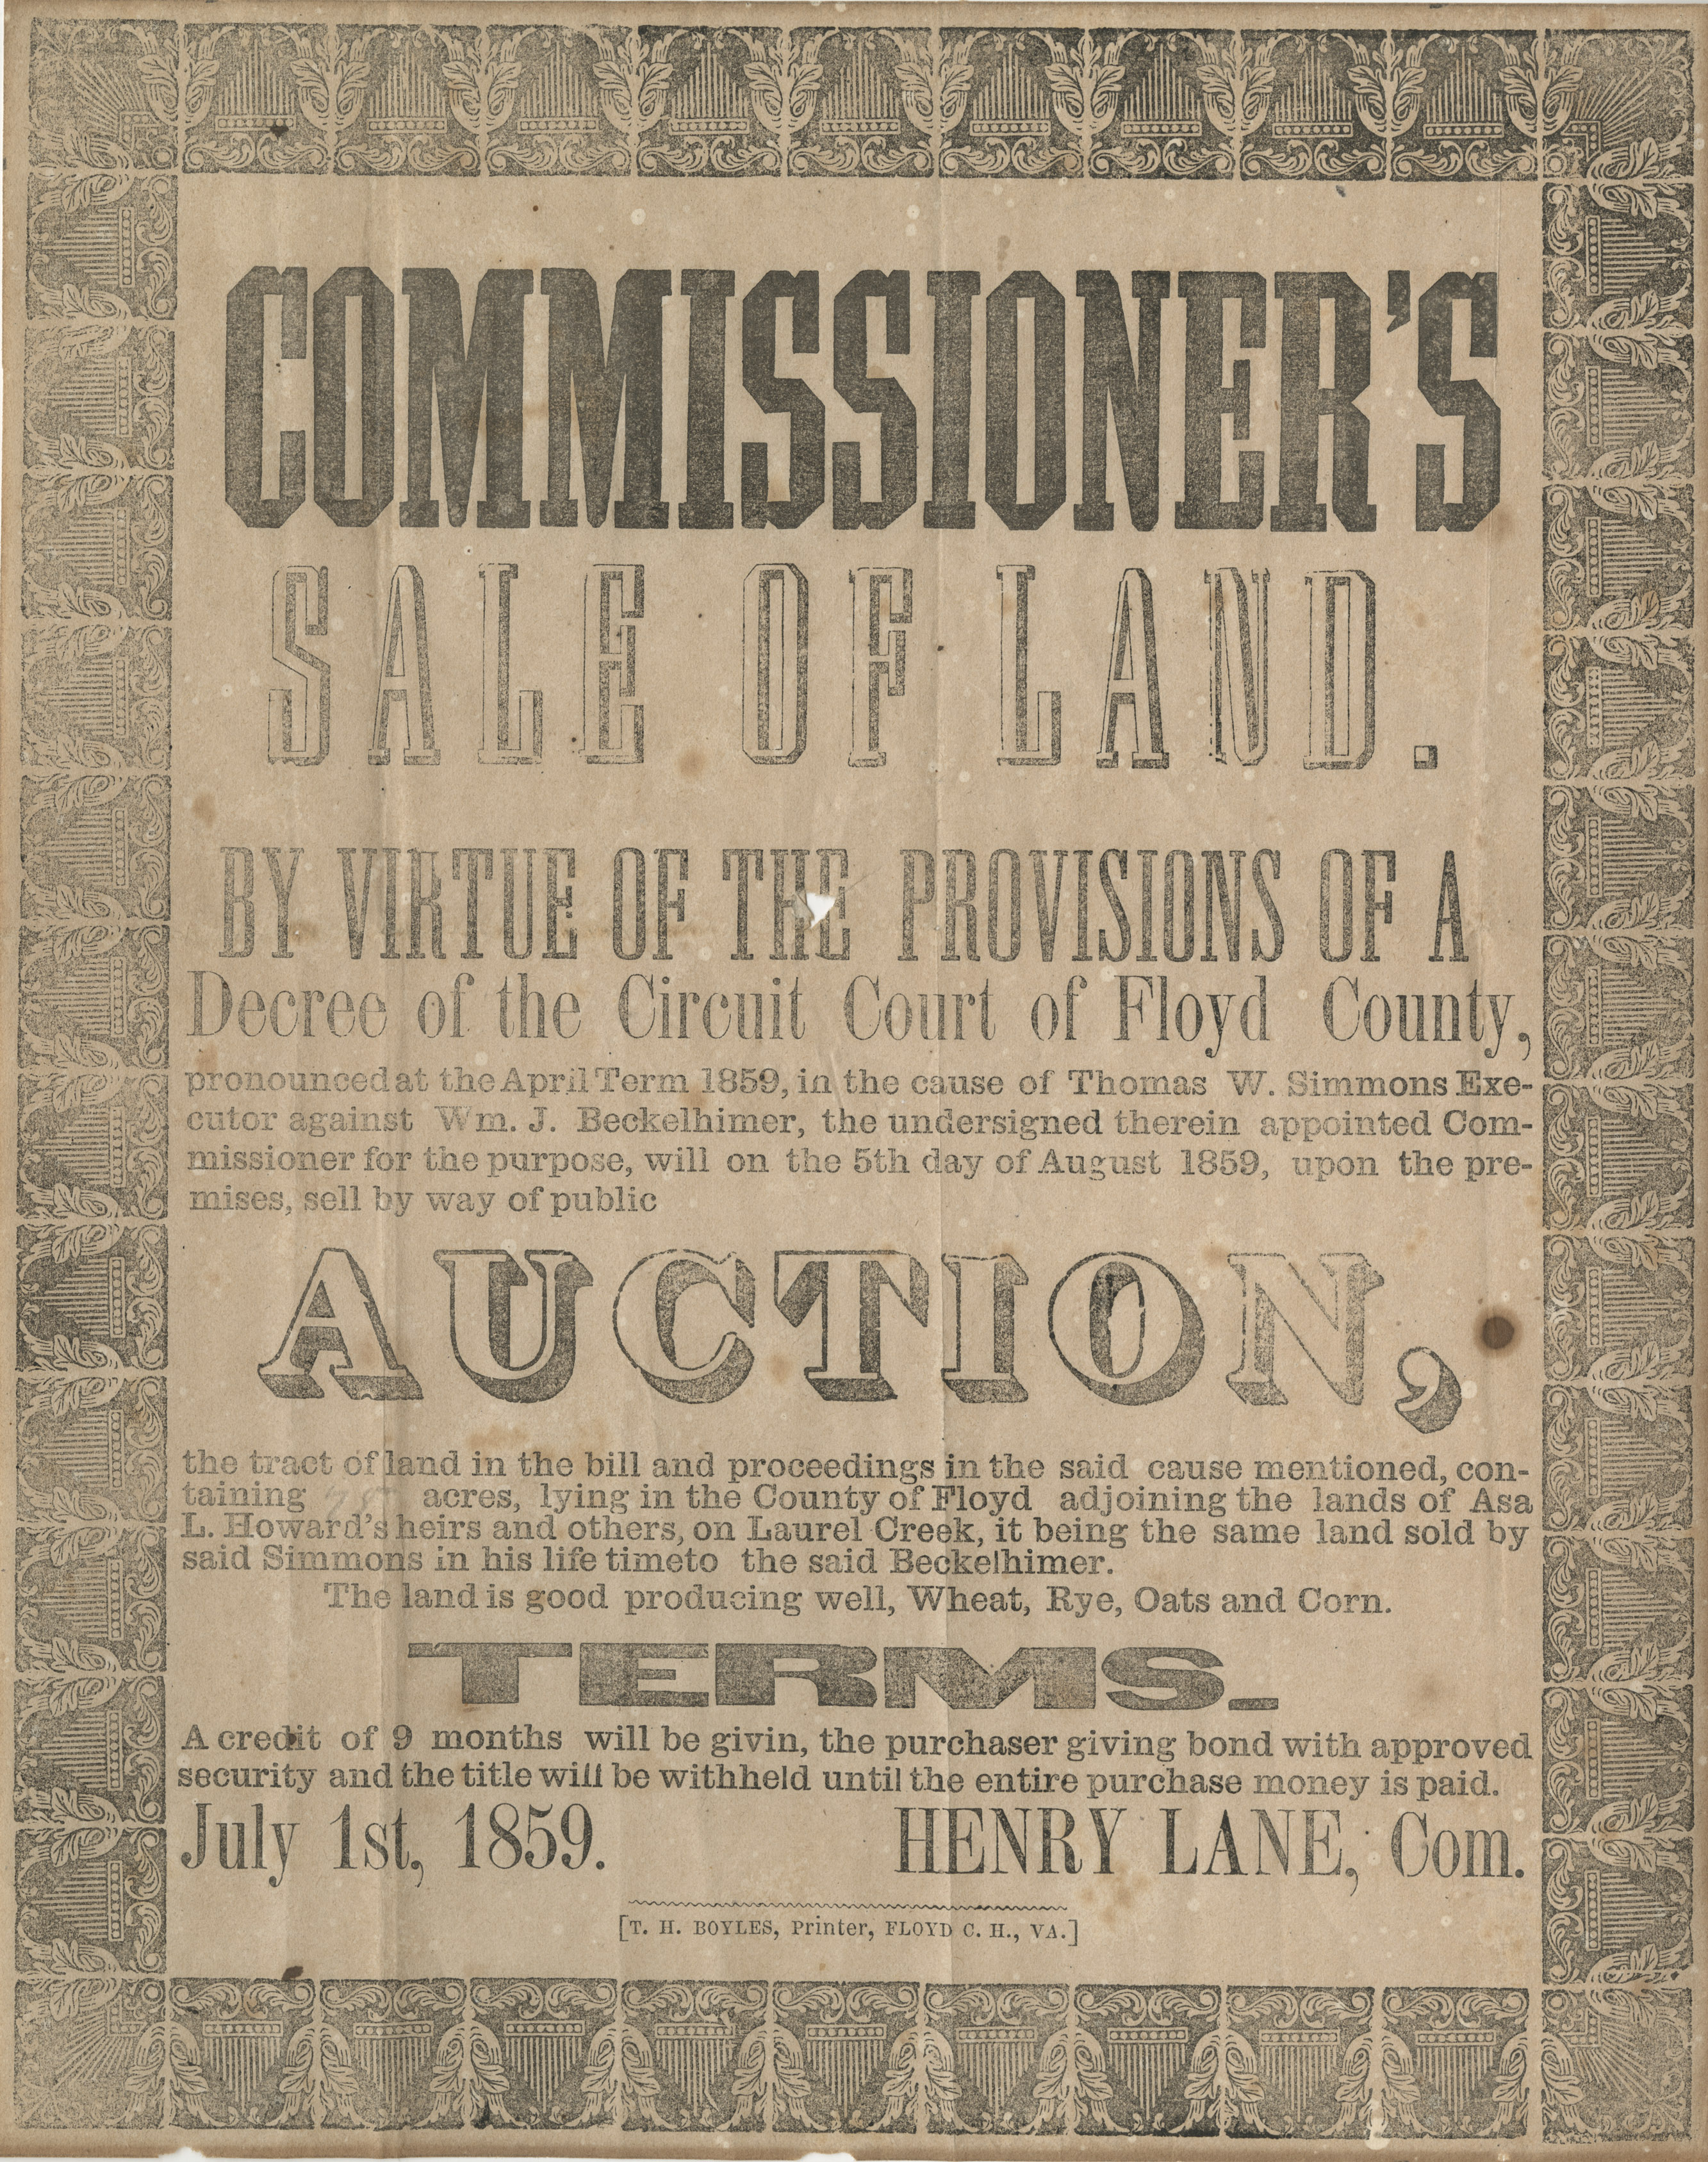 Floyd County Land Auction Broadside, 1859.